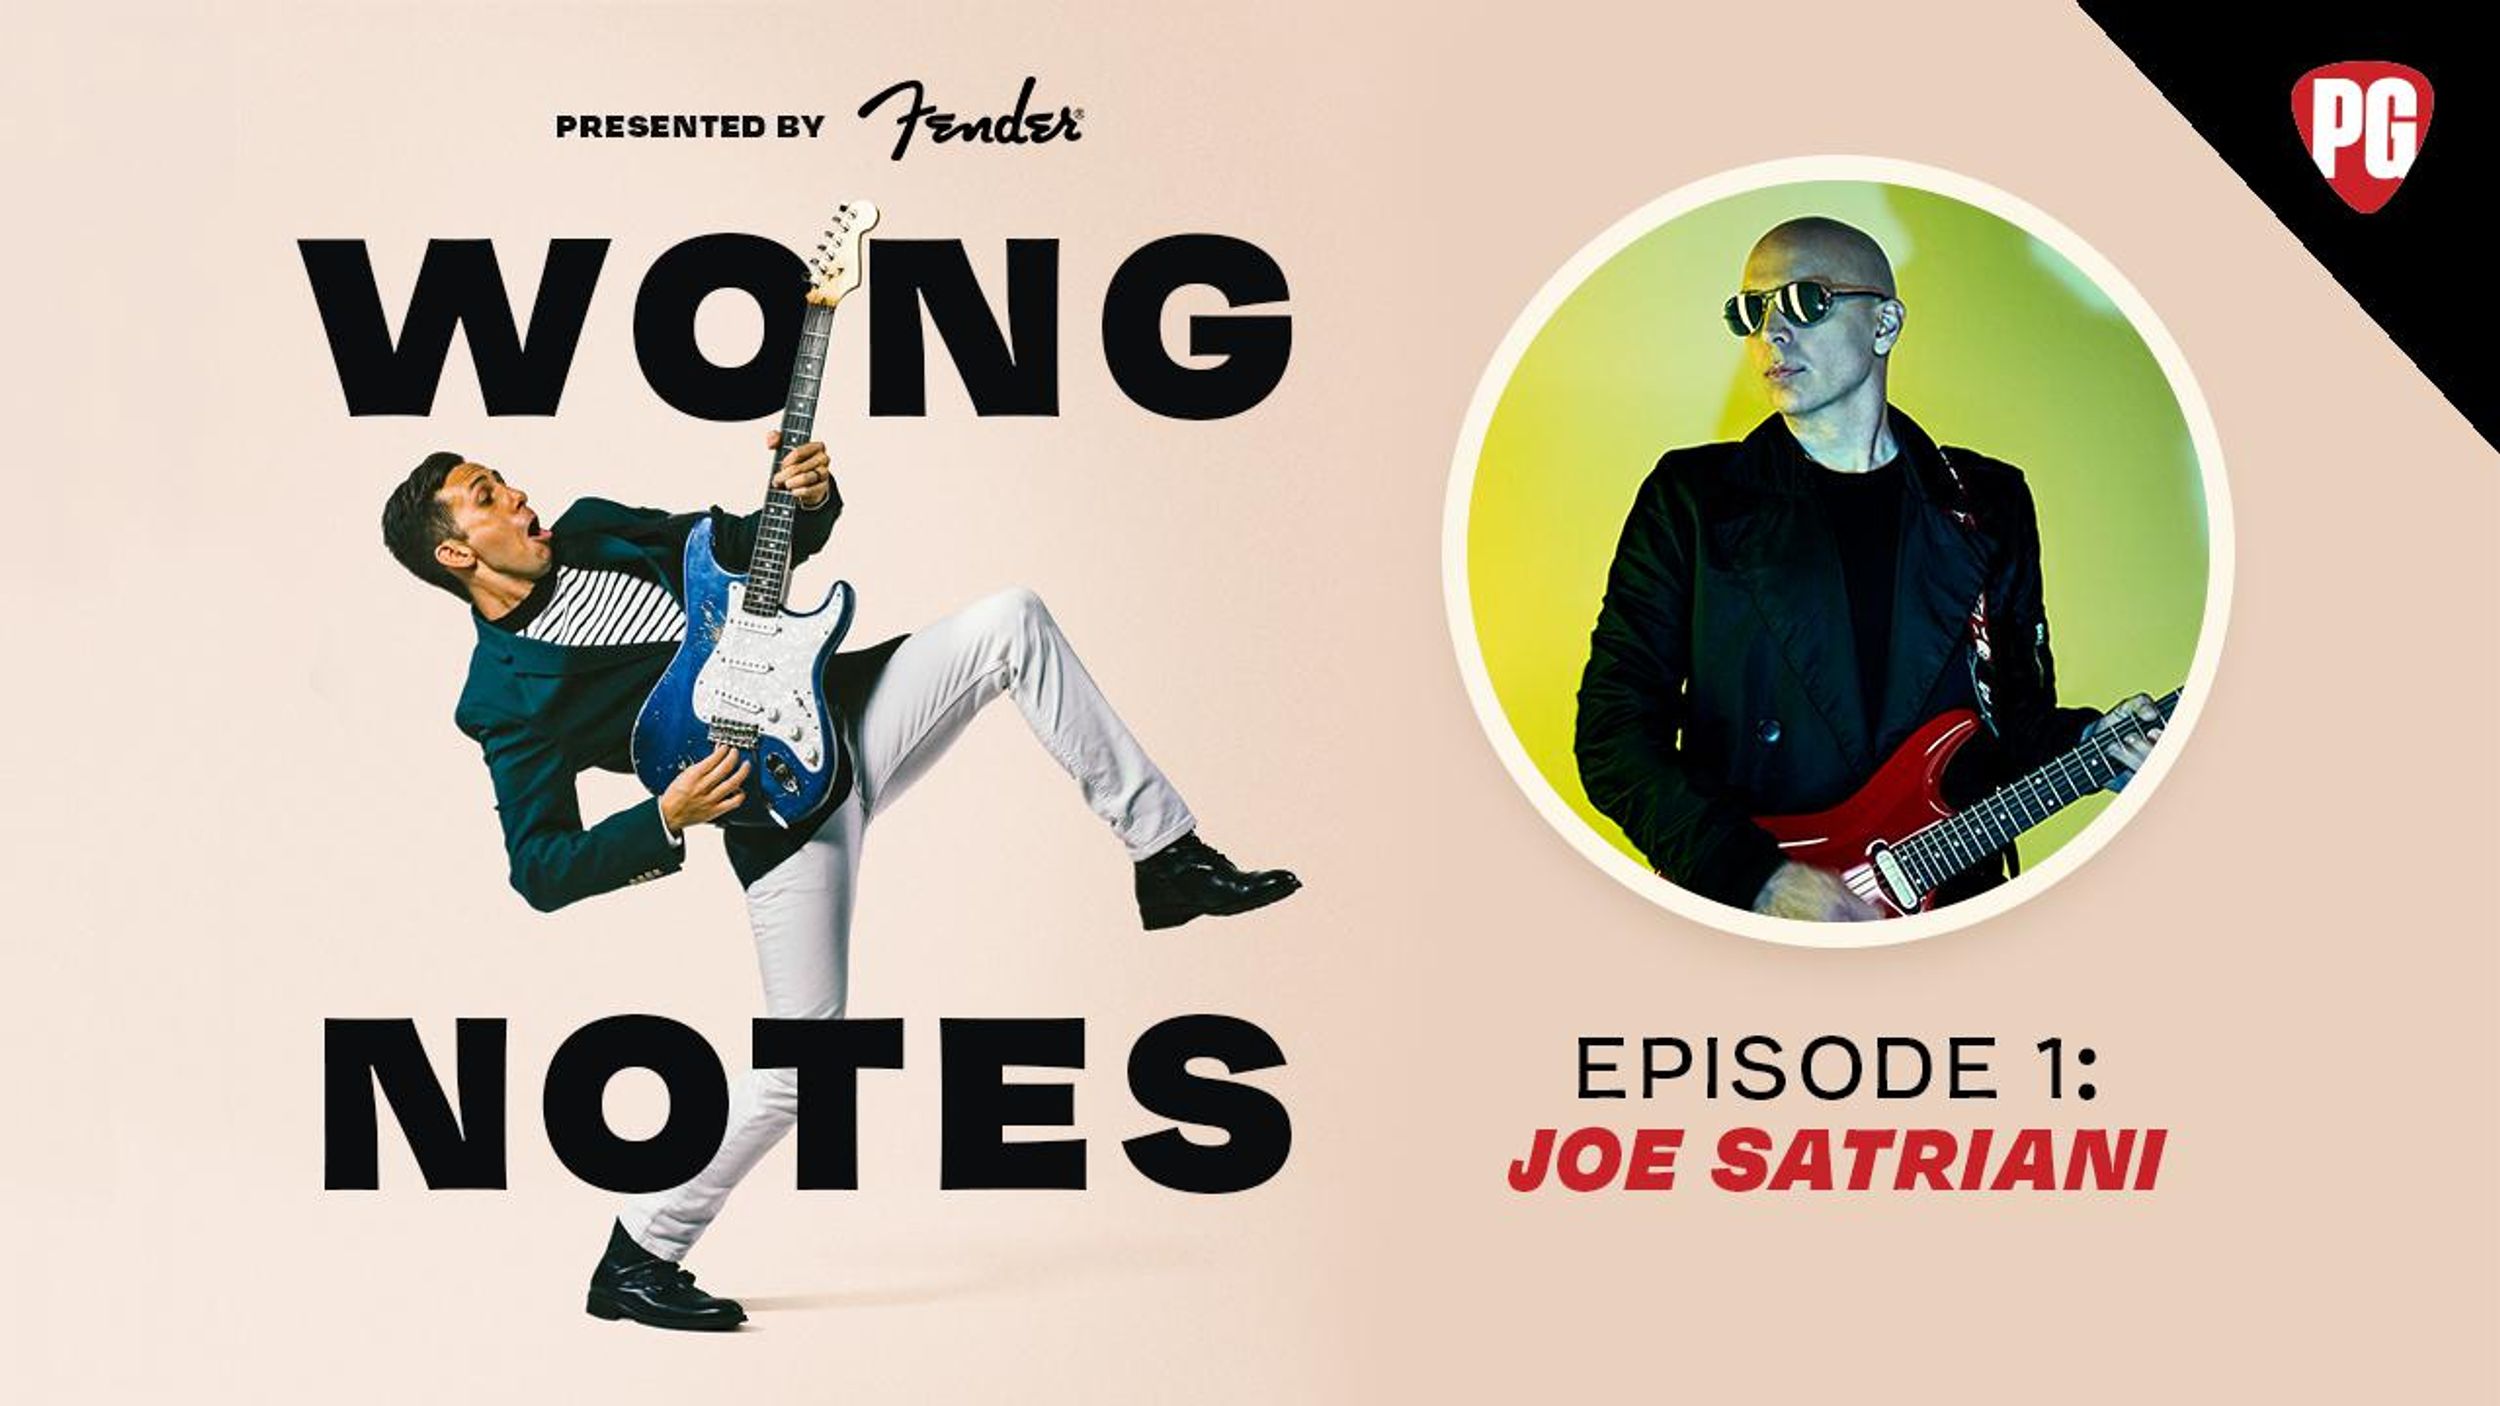 Wong Notes Episode 1: Joe Satriani